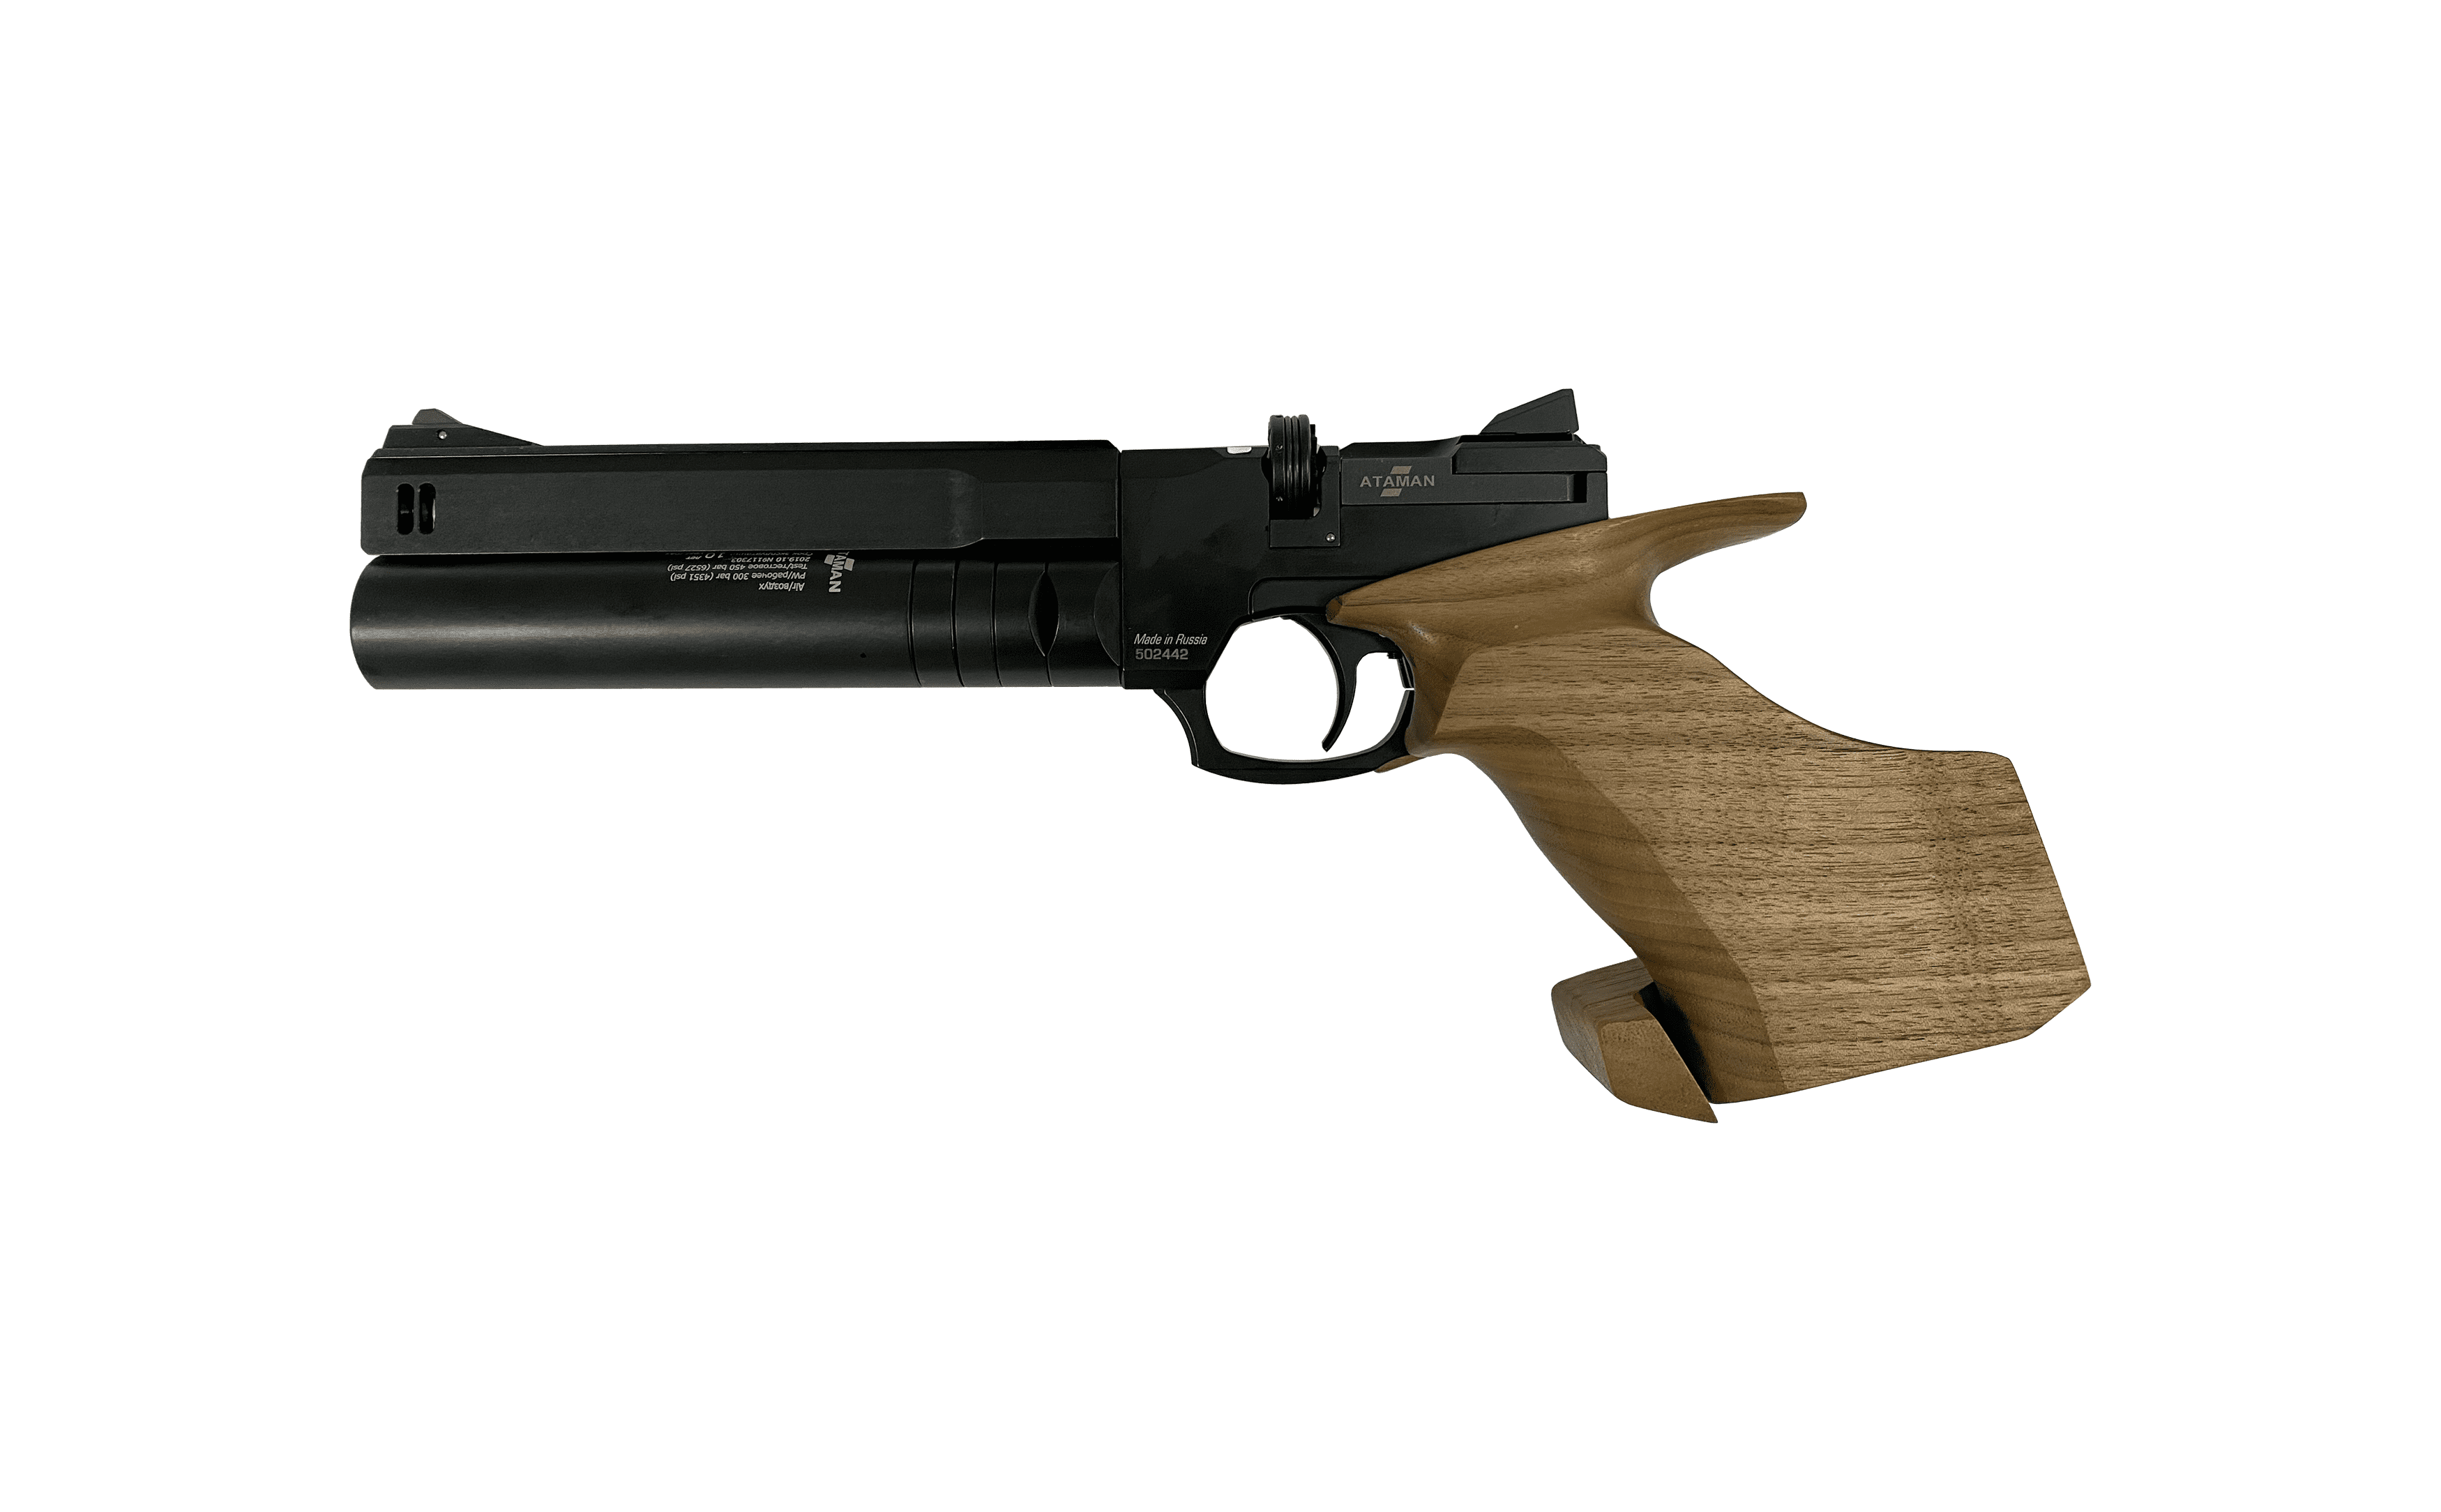 Пневматический PCP пистолет ATAMAN AP16 Black Compact (рукоятка Walnut SP), кал. 4.5мм